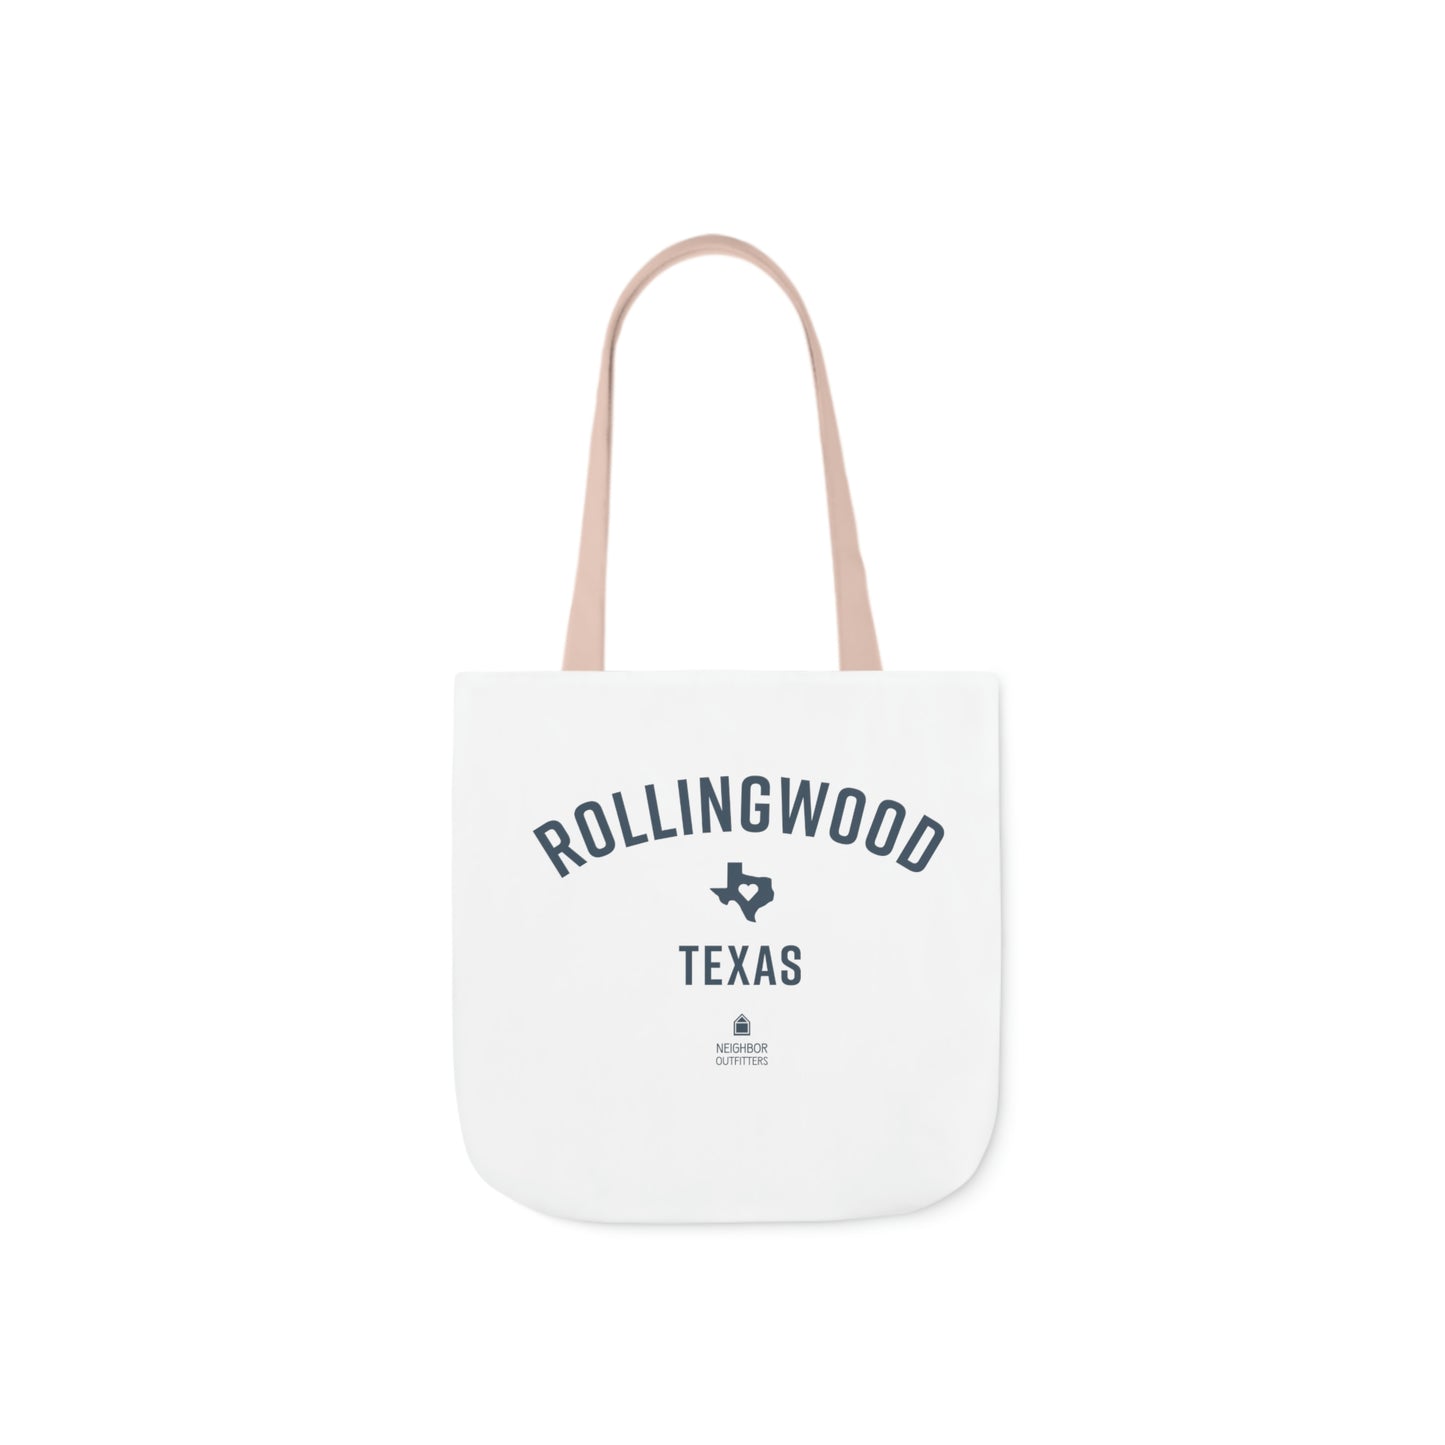 Rollingwood Tote Bag - "Full Hearts"